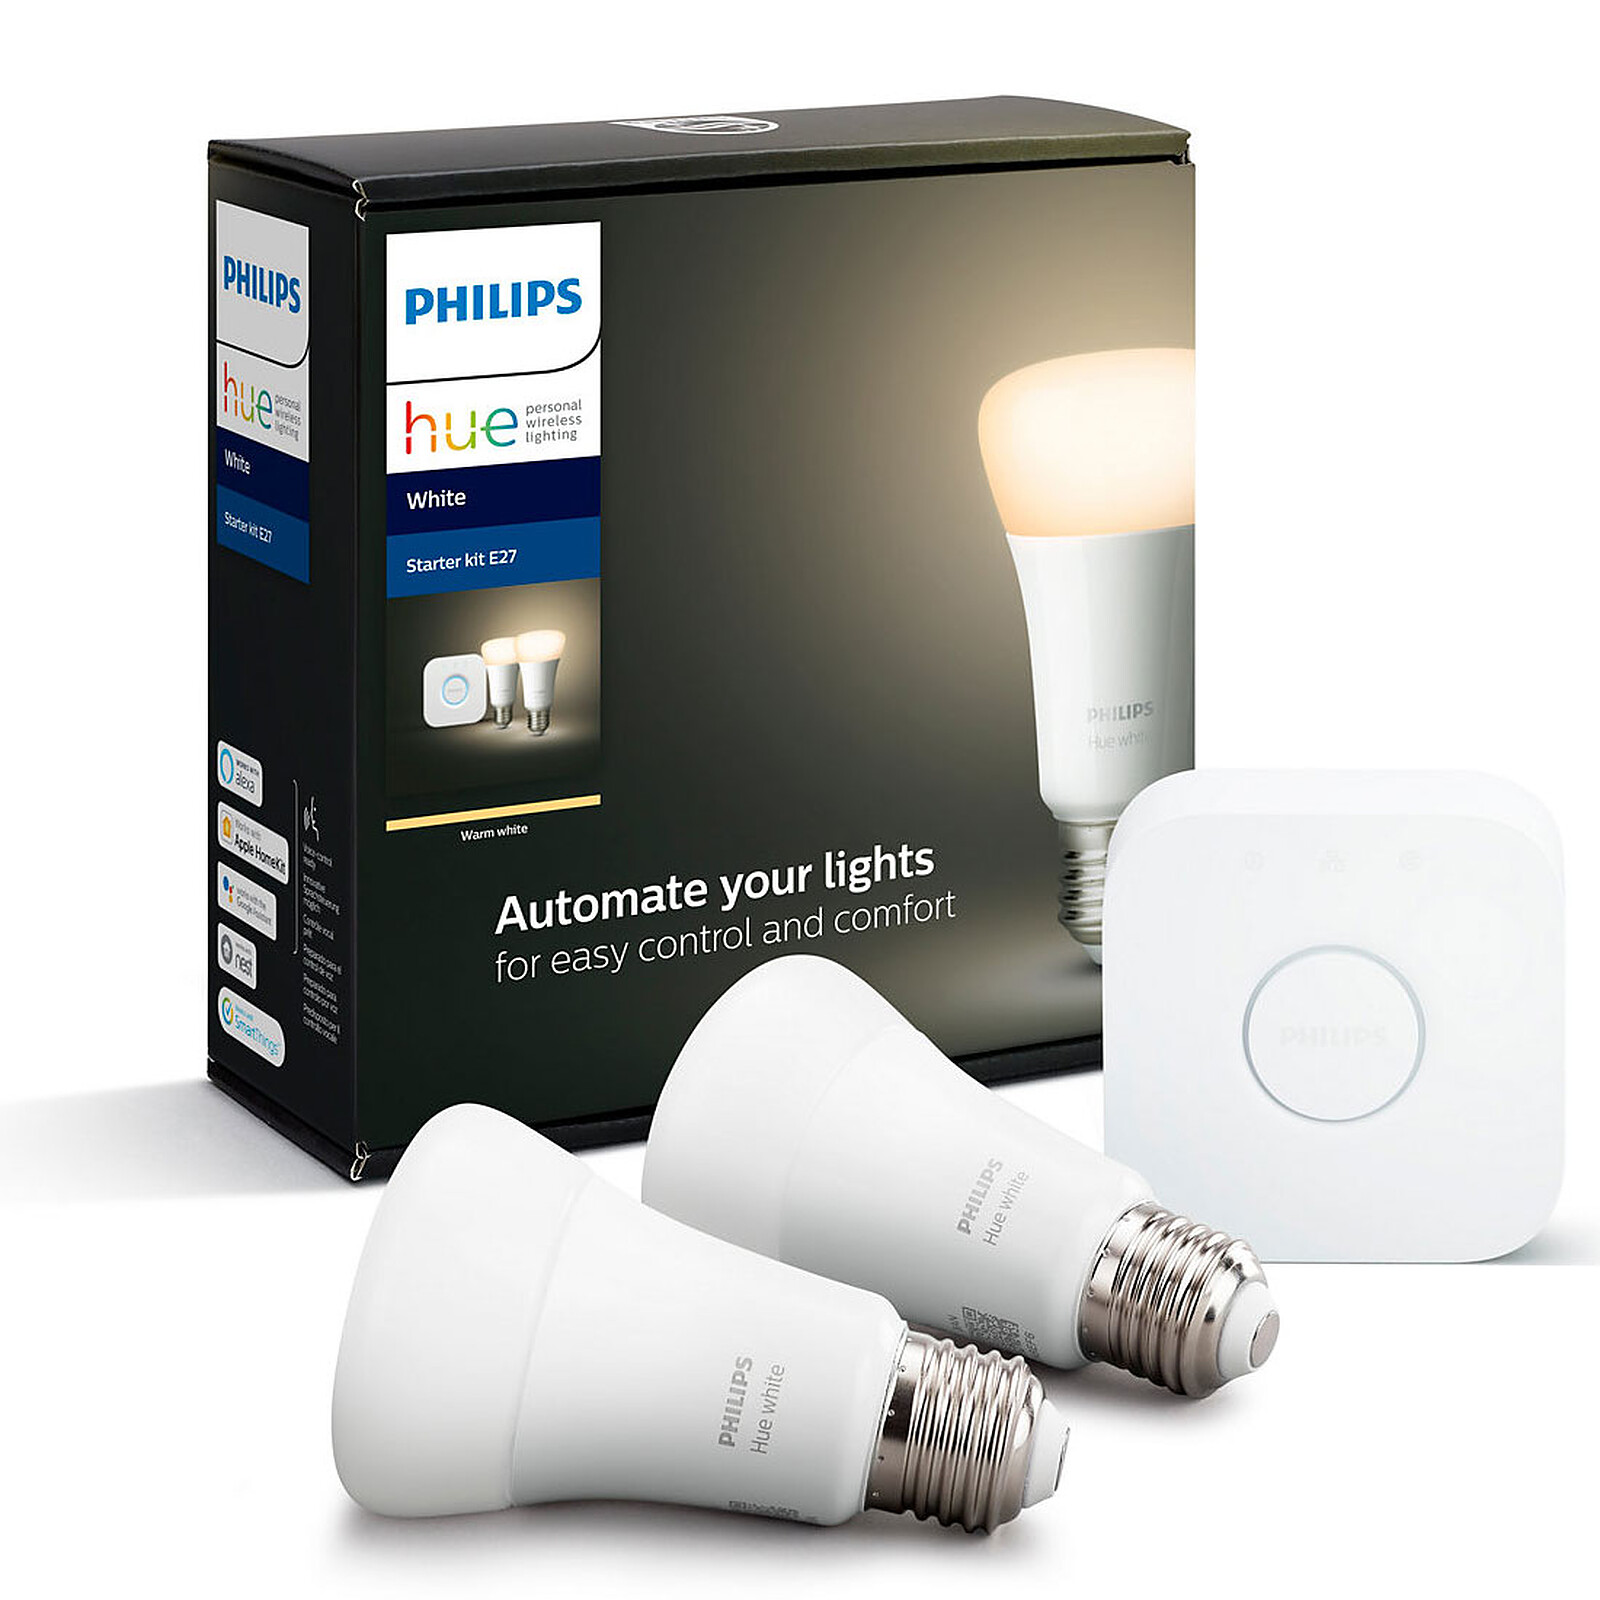 Philips Hue Kit de démarrage Lightstrip V4 2m & …